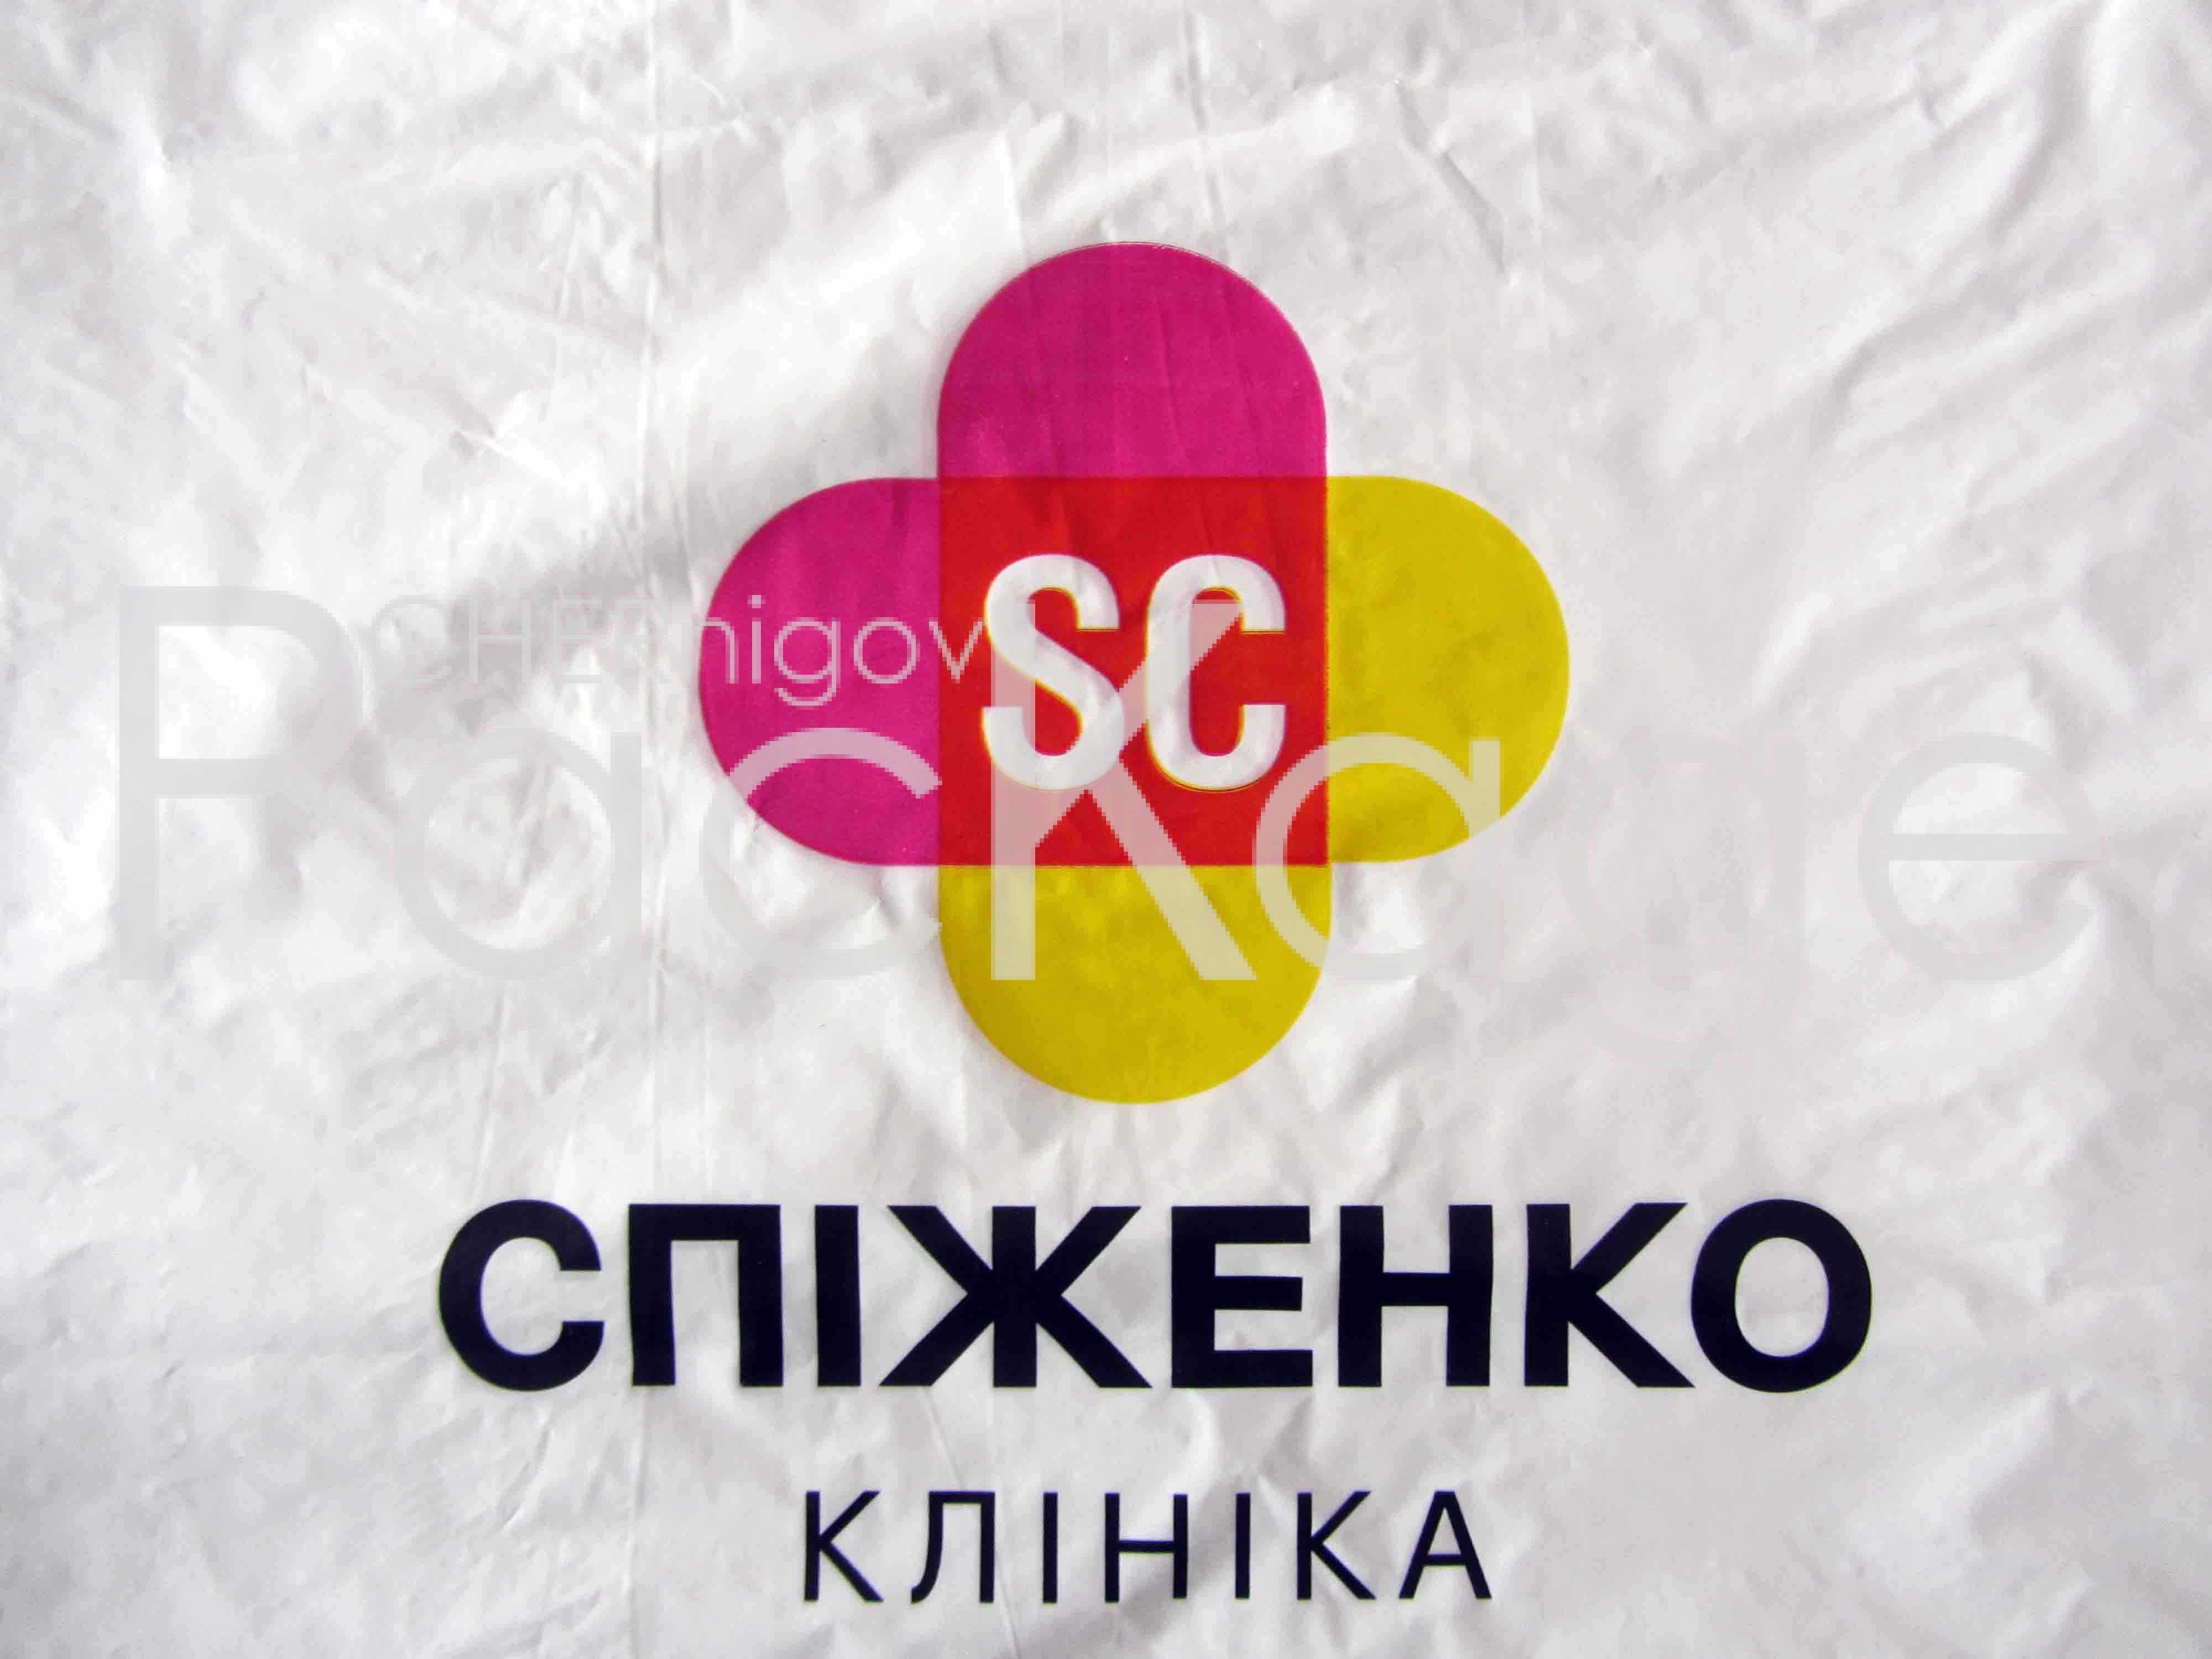 Друк на пакетах Chernigov Package - Фото IMG_6469